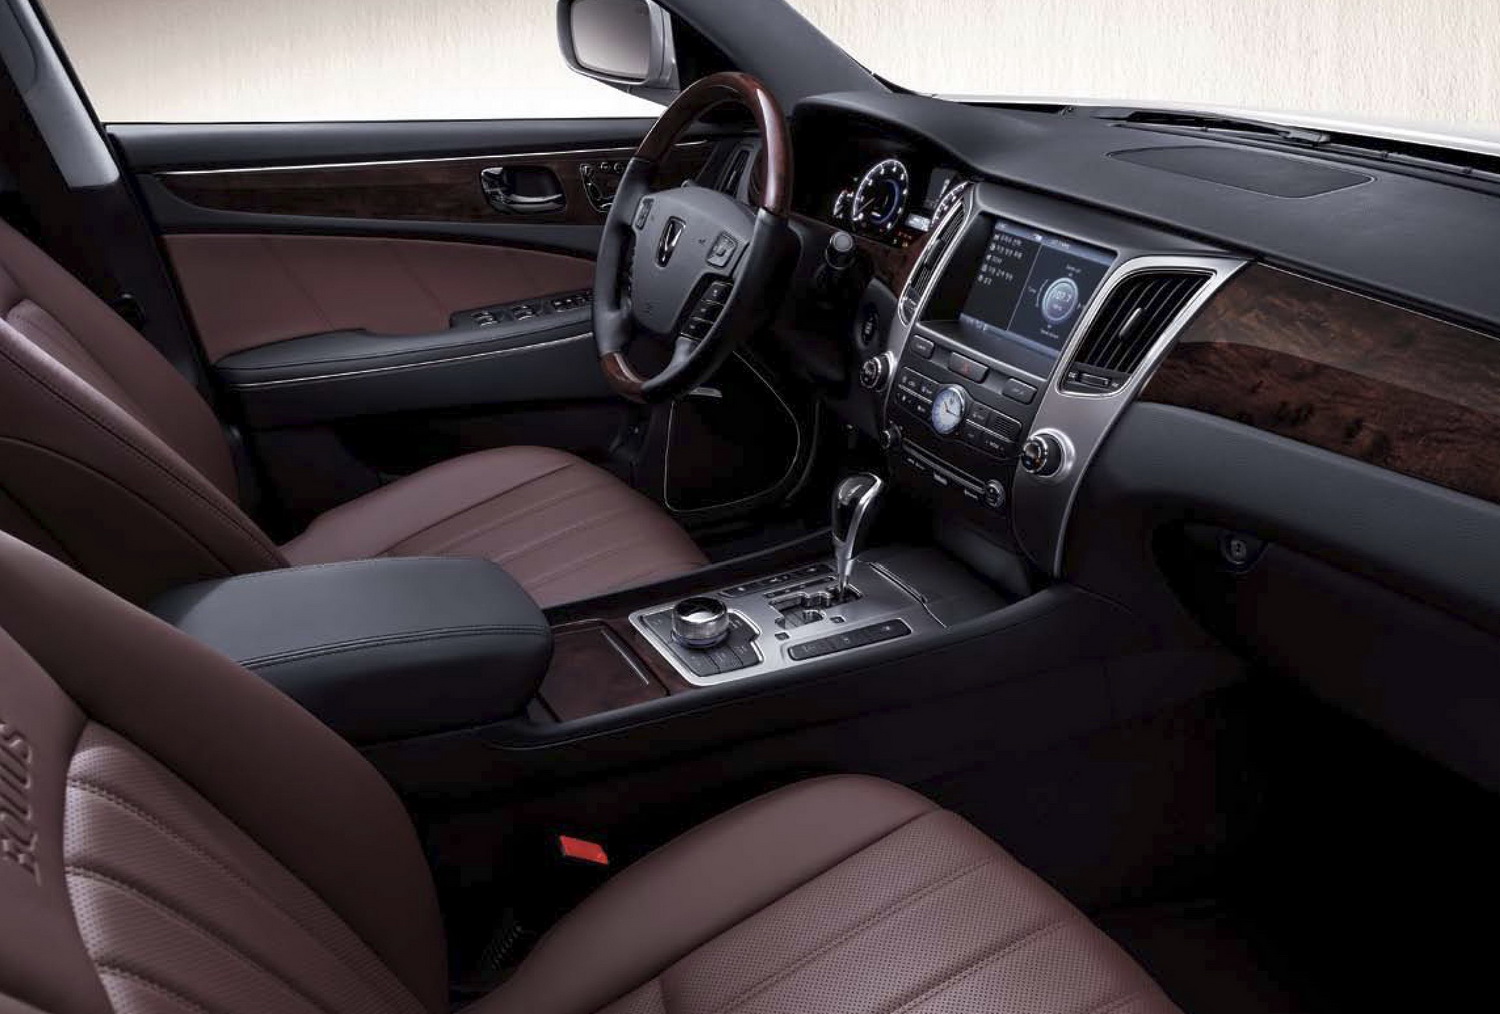 Luxury Car Hyundai Equus 2011 Specification Review